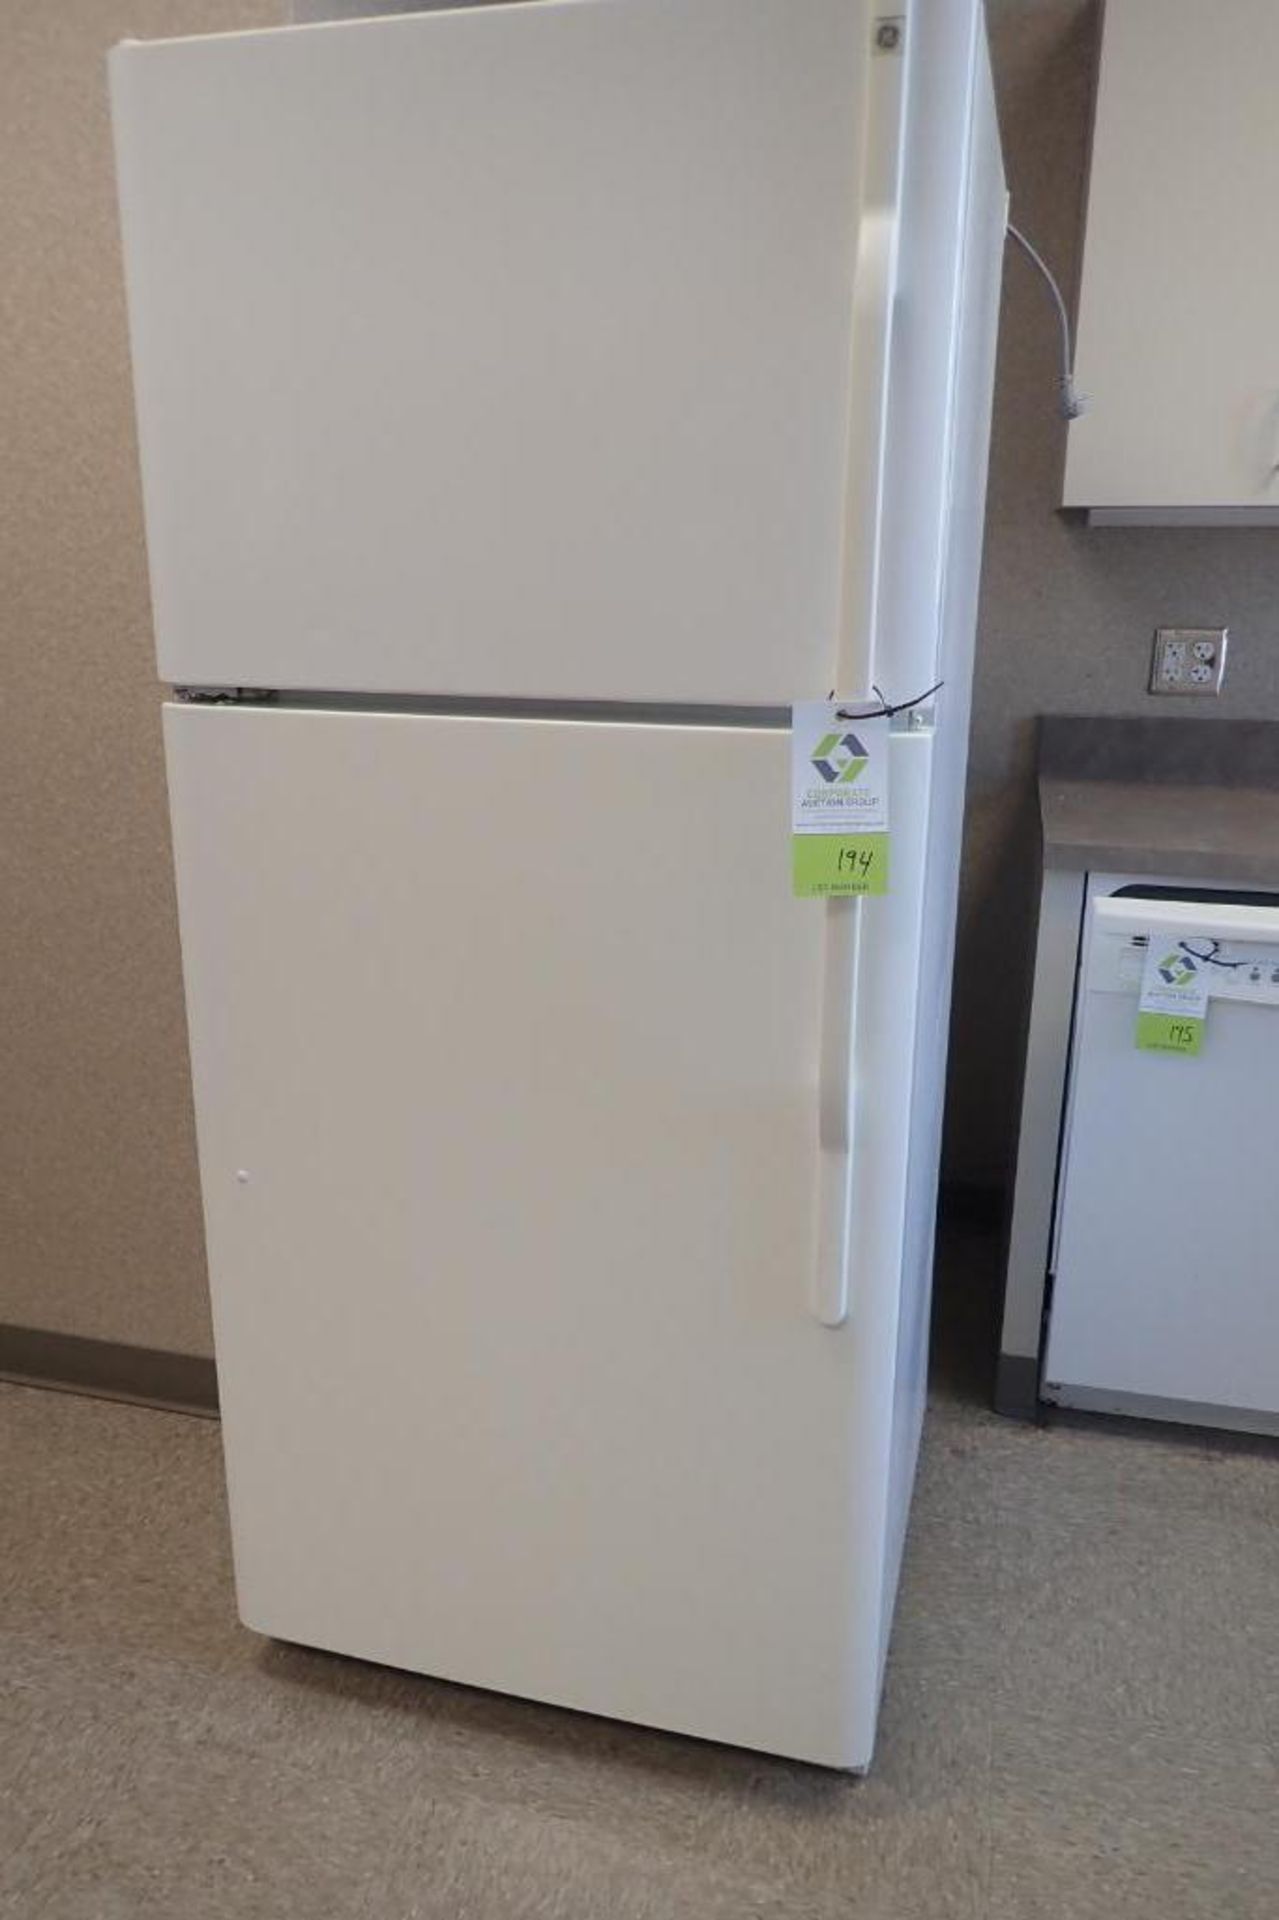 GE white refrigerator and freezer combo